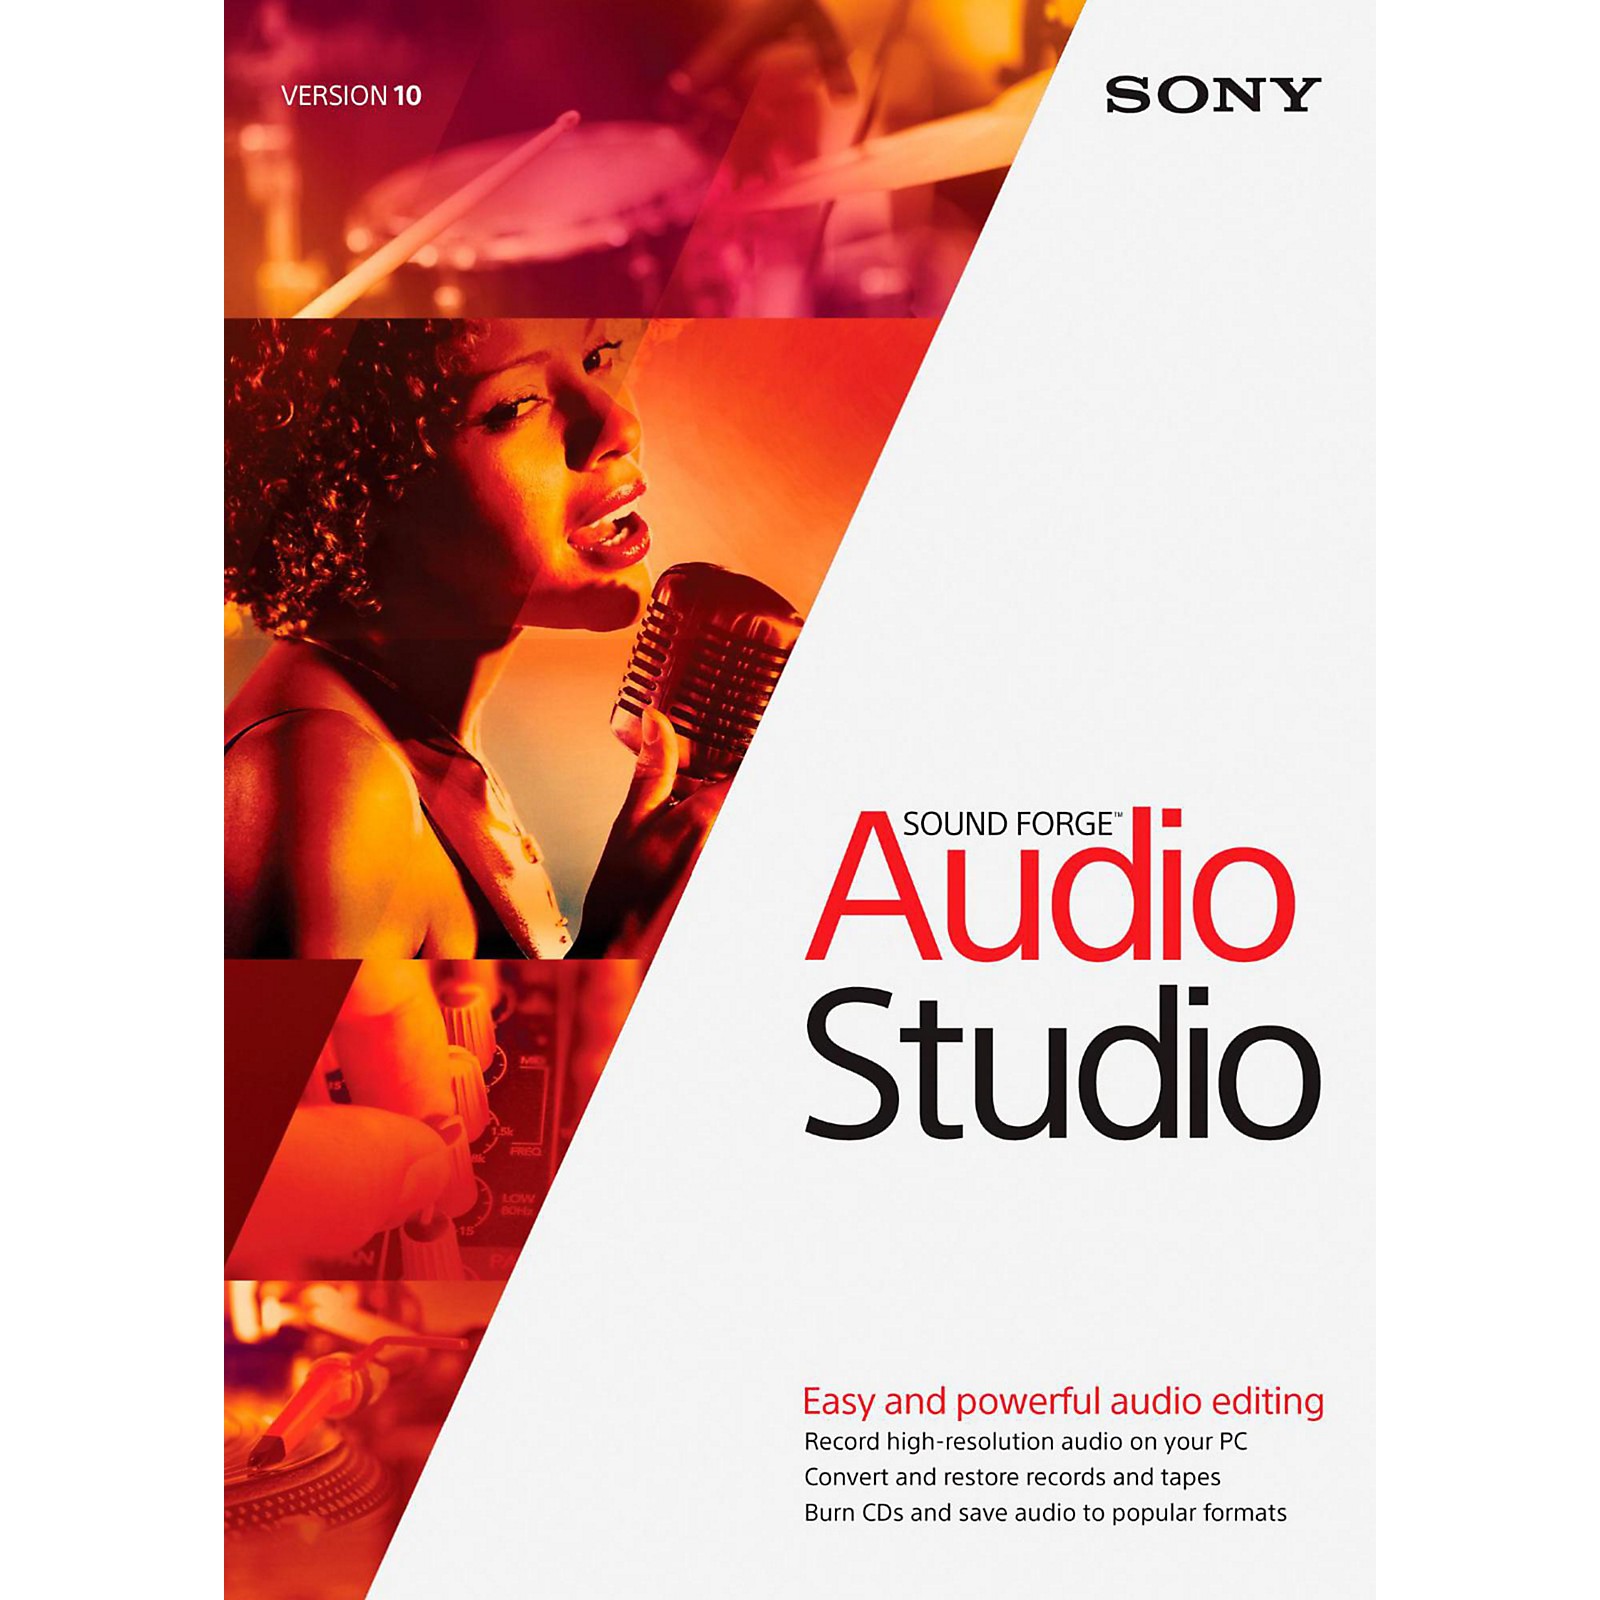 MAGIX Sound Forge Audio Studio Pro 17.0.2.109 download the last version for ipod